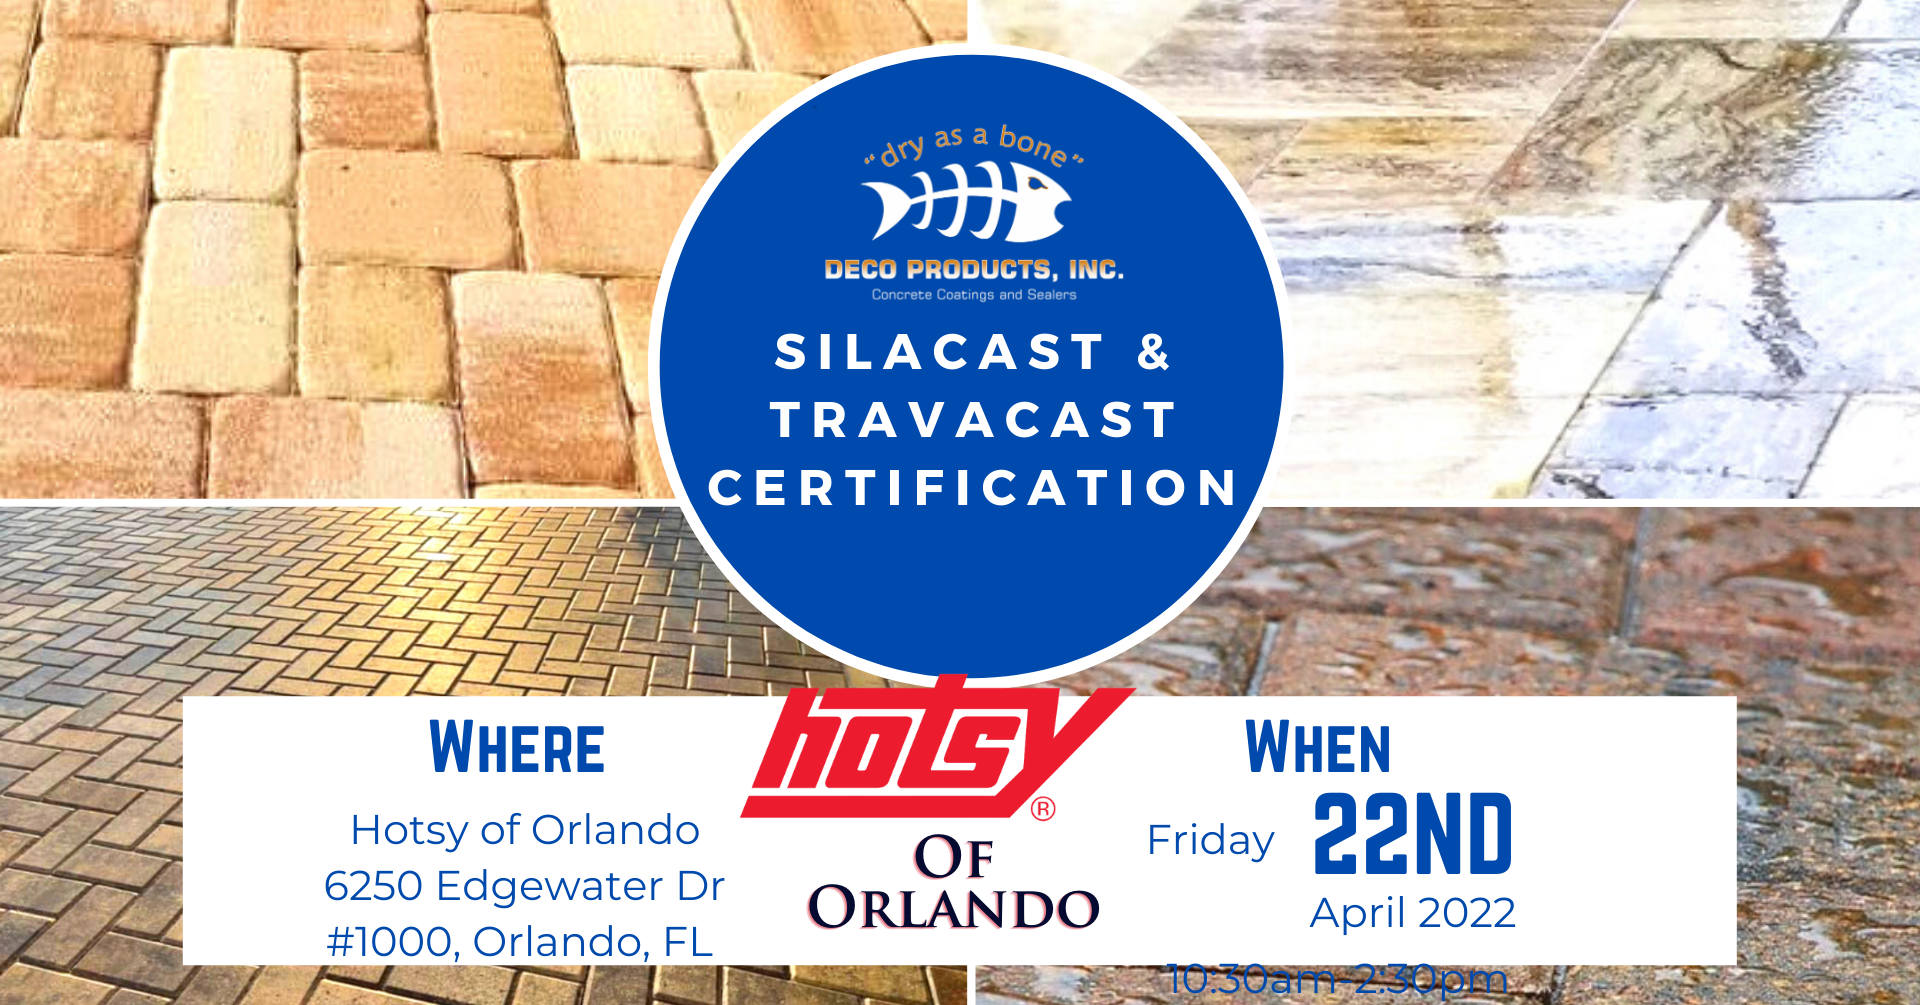 flyer promoting a silacast & travacast certification program